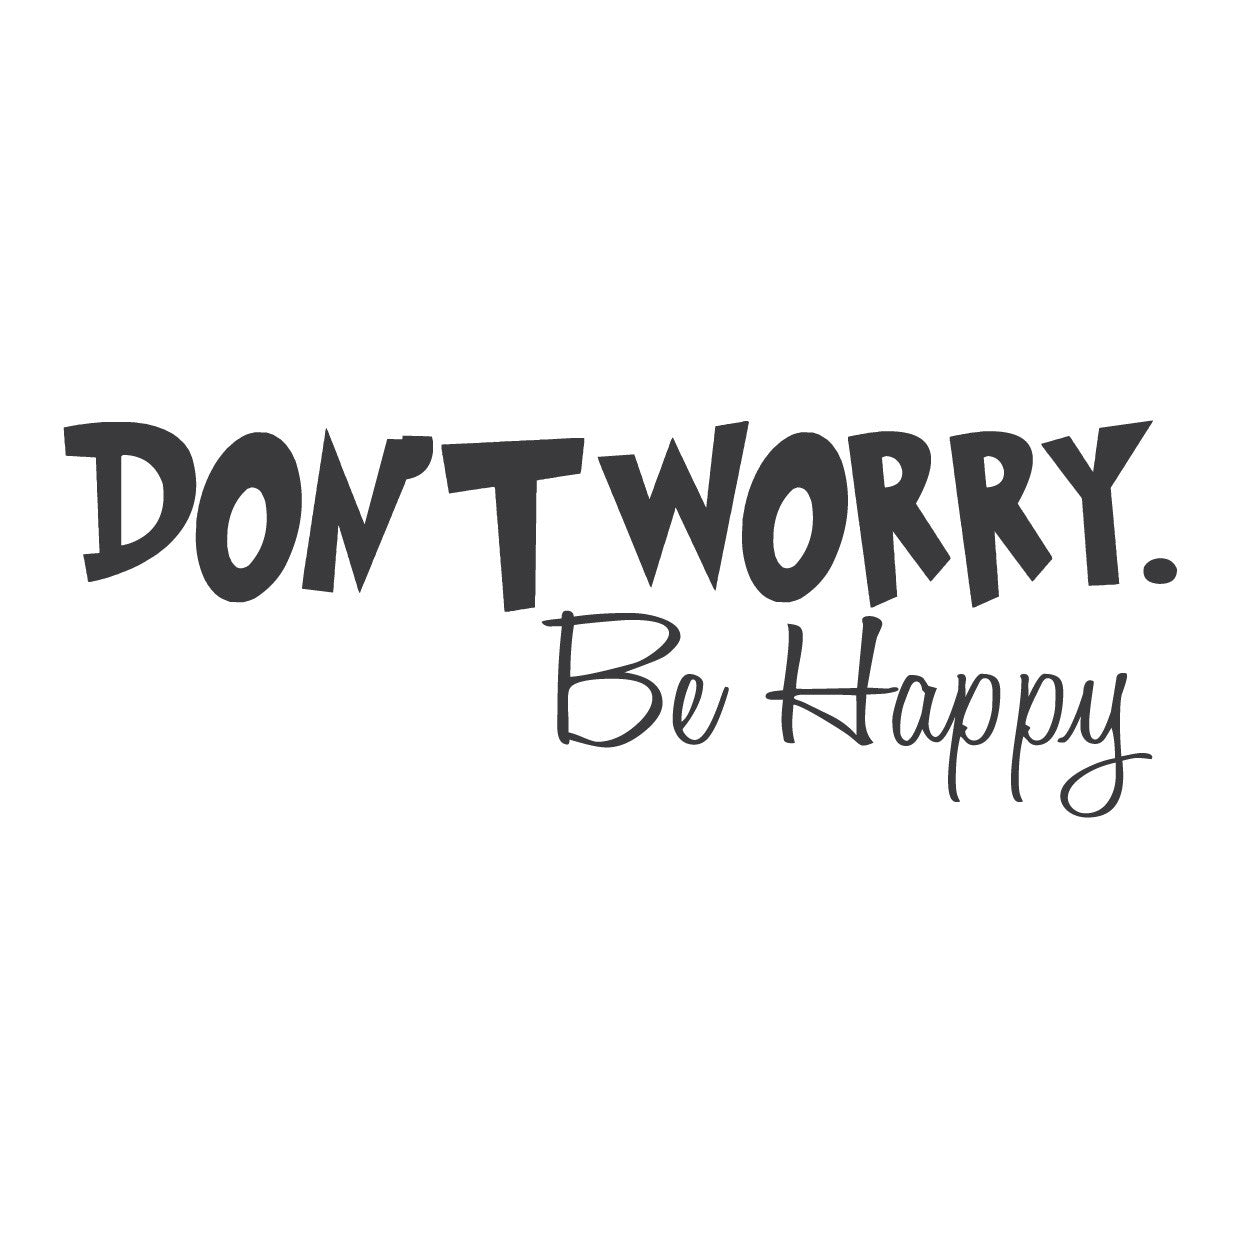 Don t worry dont. Надпись don't worry be Happy. Don't worry be Happy картинки. Донт вори би Хэппи. Надпись донт вори би Хэппи.